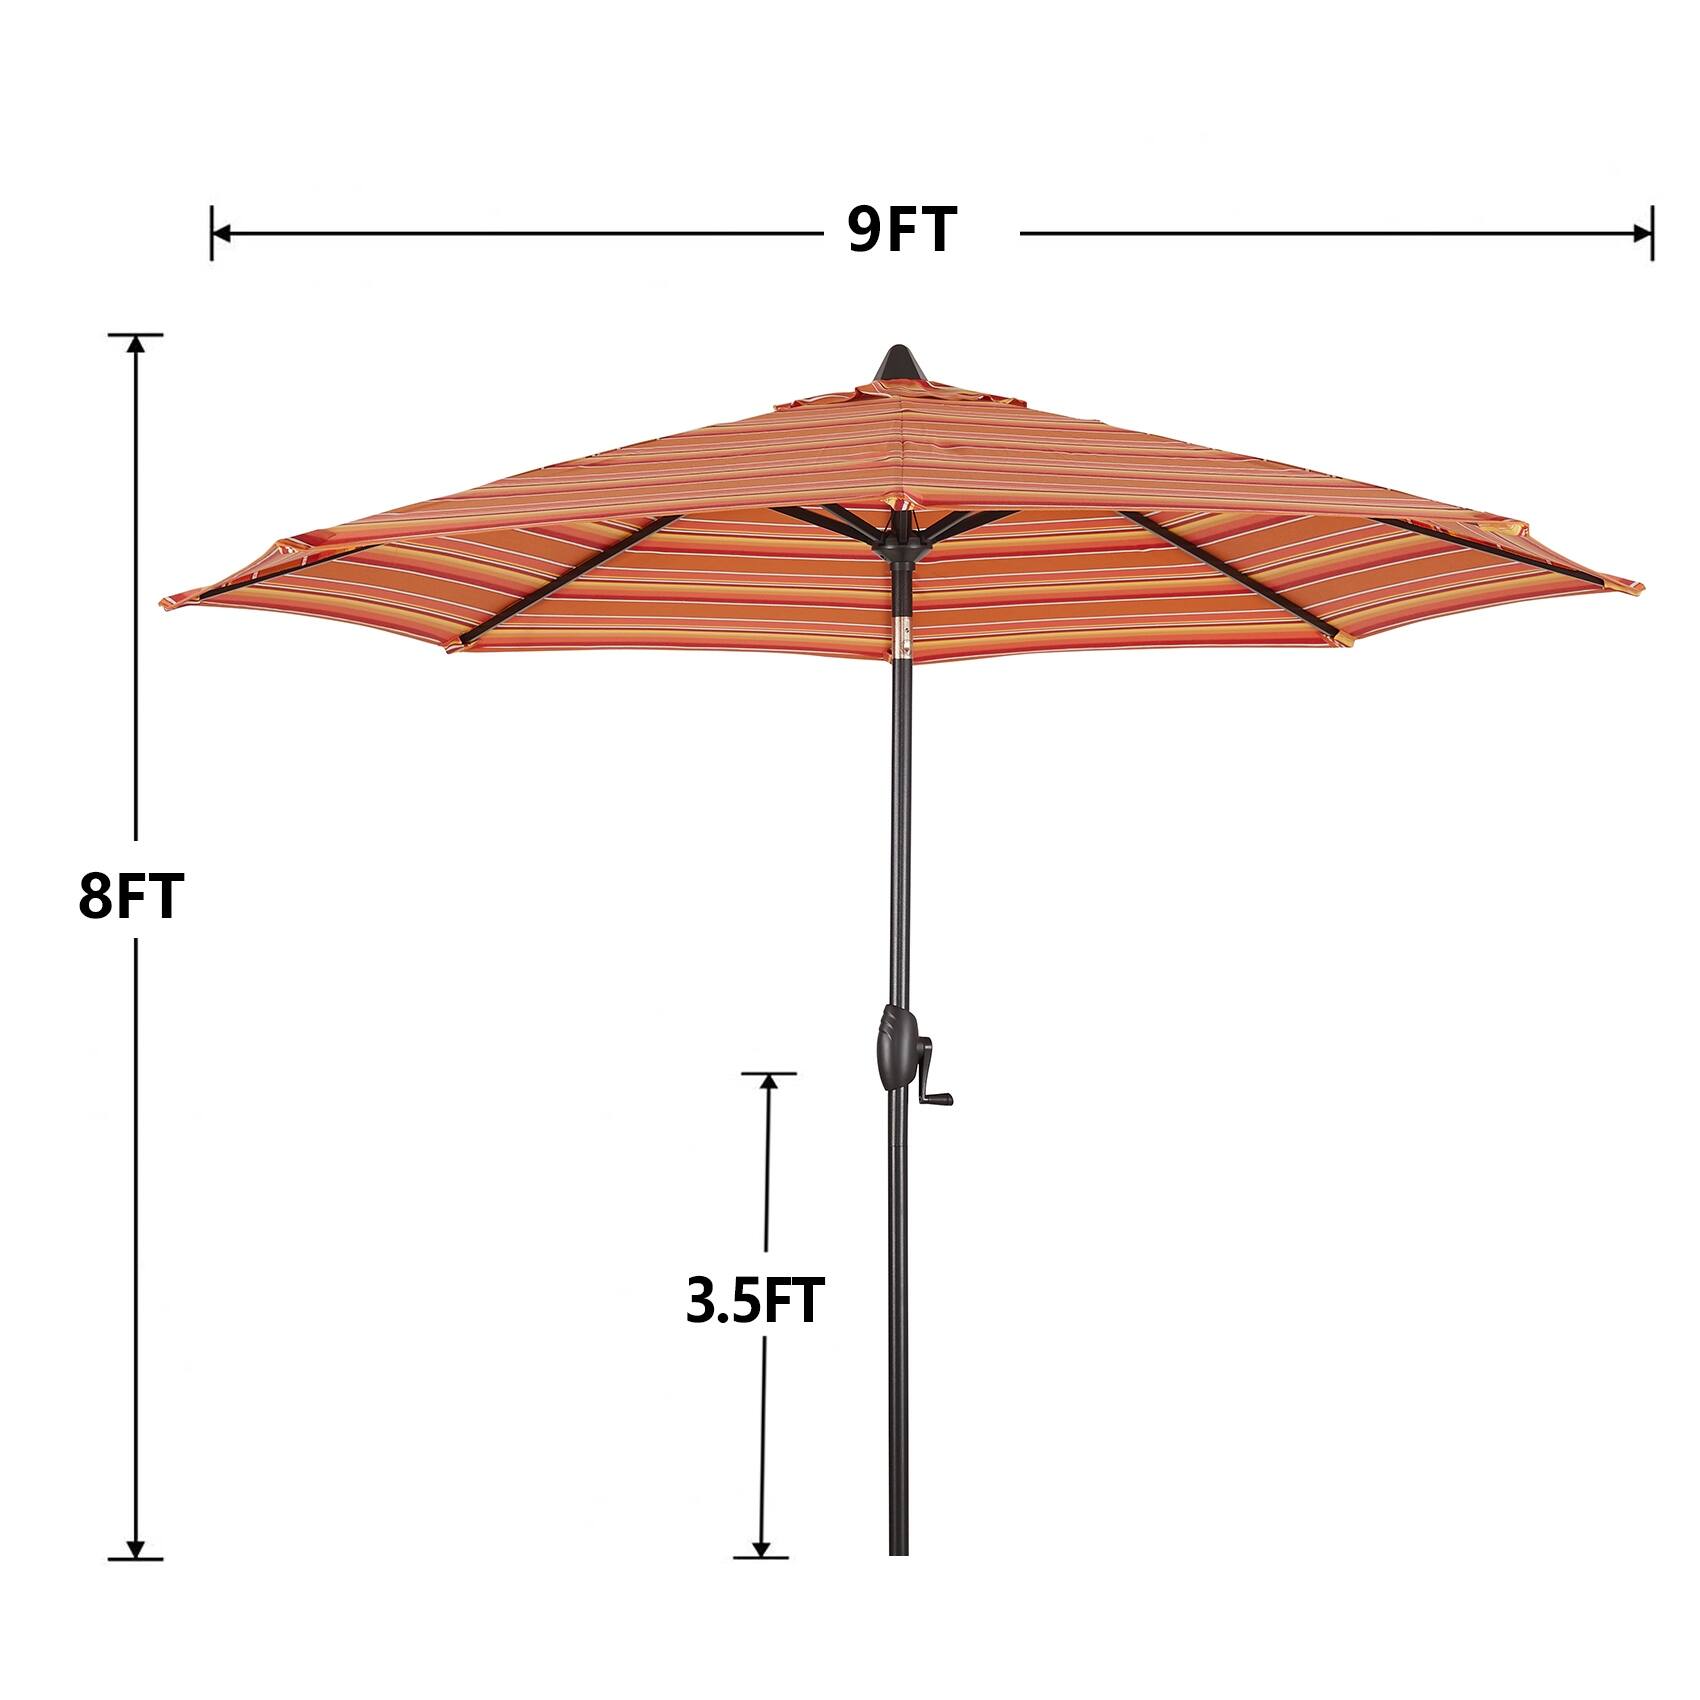 9Ft Striped Market Umbrella with Sunbrella Fabric Outdoor Umbrella